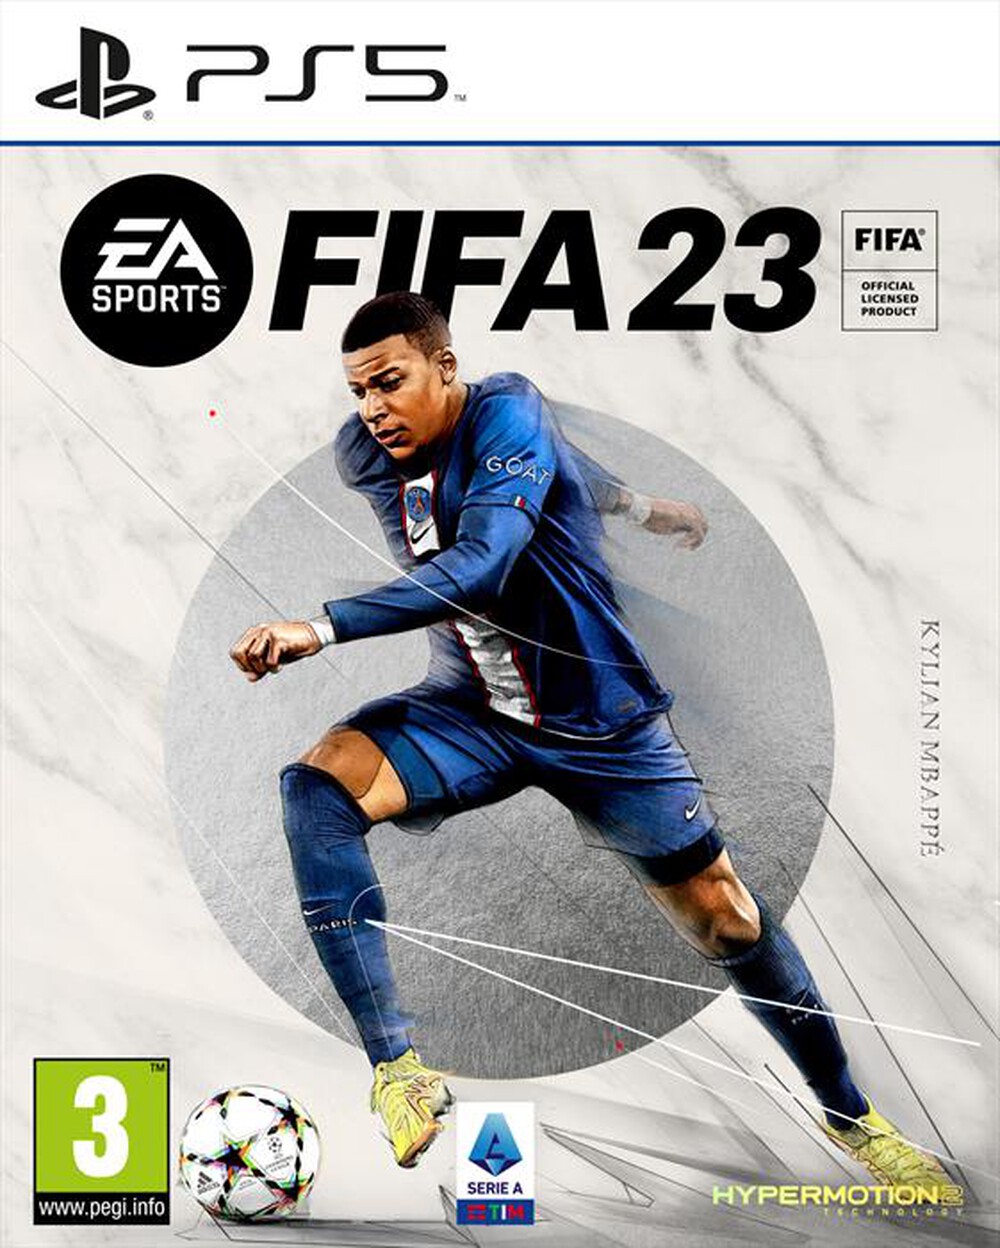 "ELECTRONIC ARTS - FIFA 23 PS5"